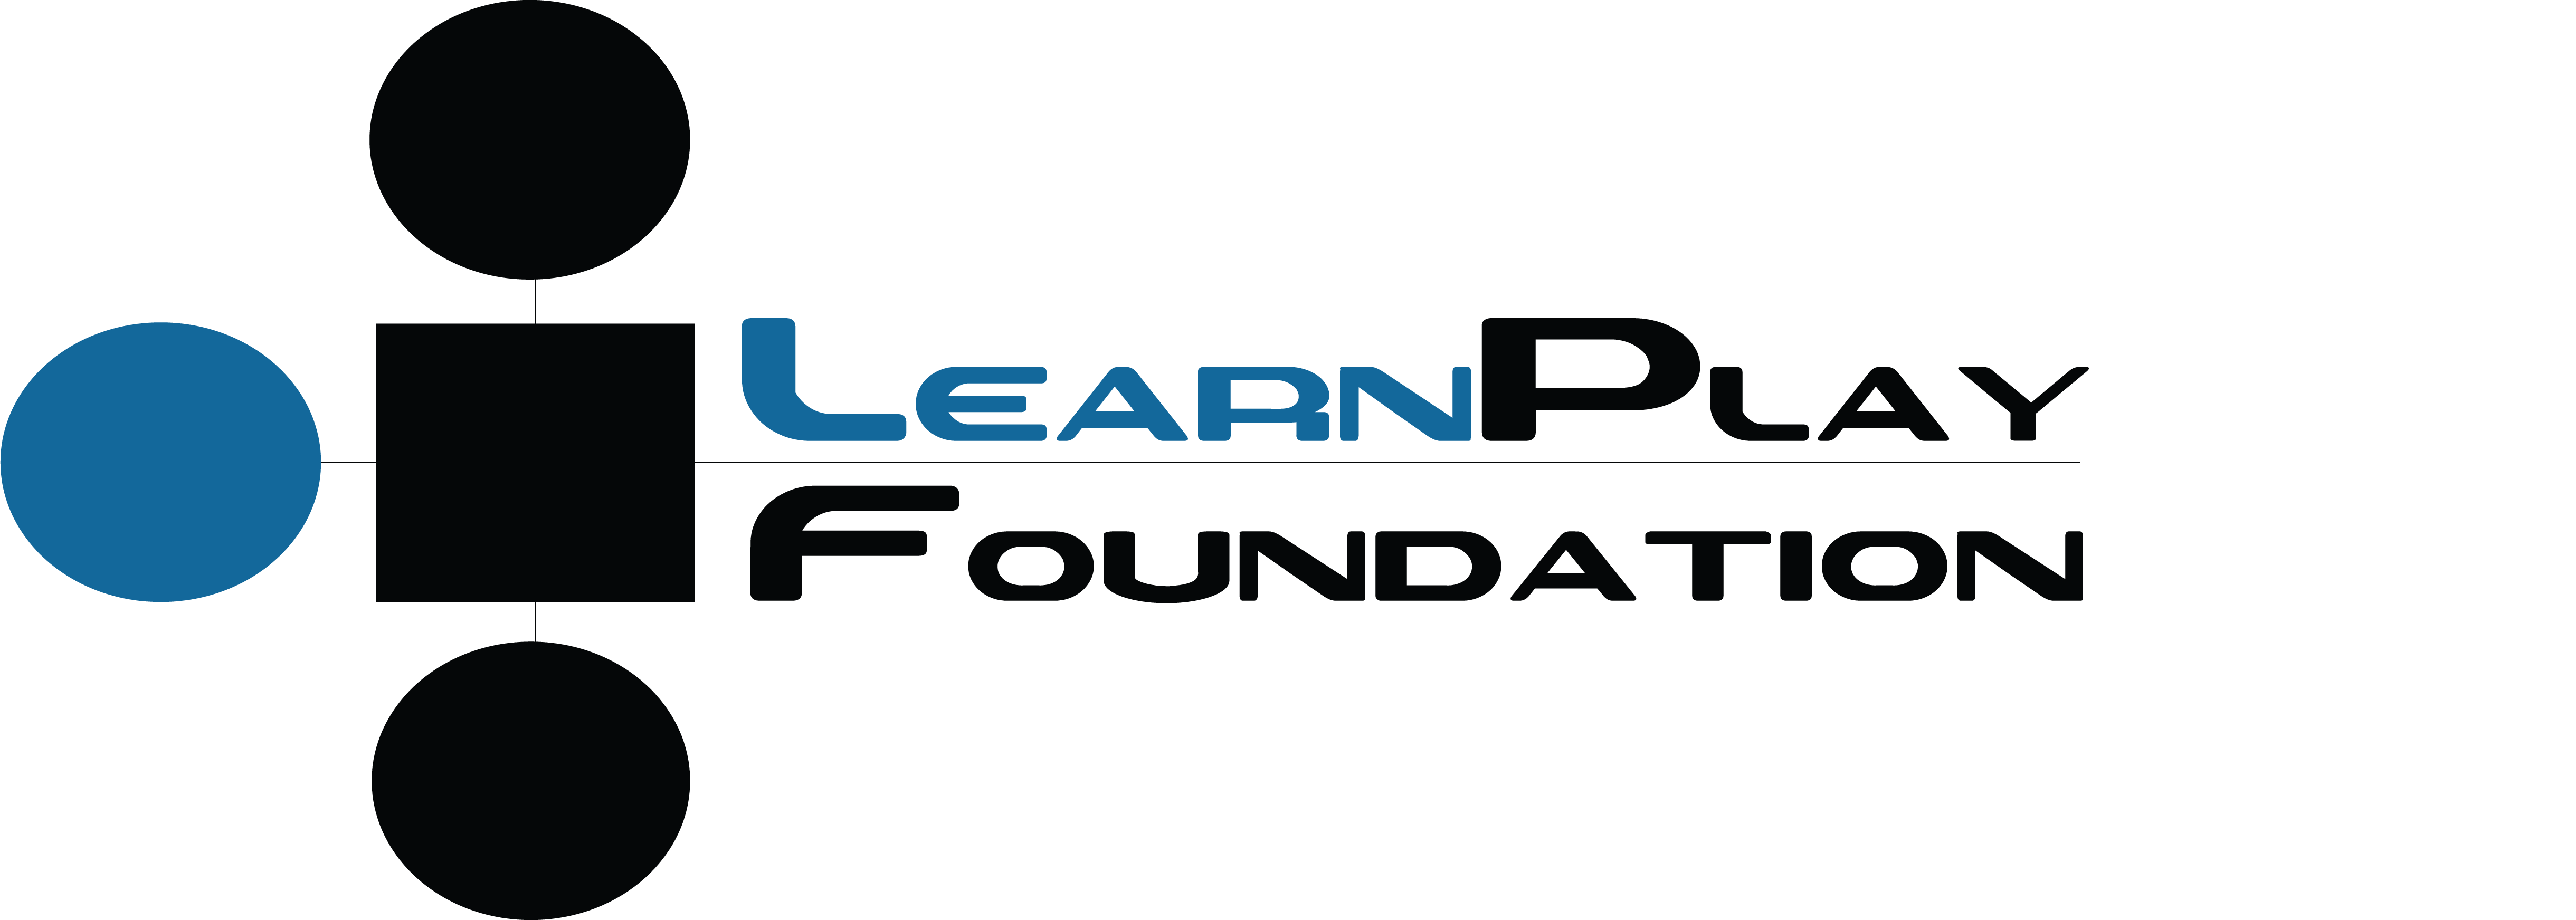 LearnPlay Foundation